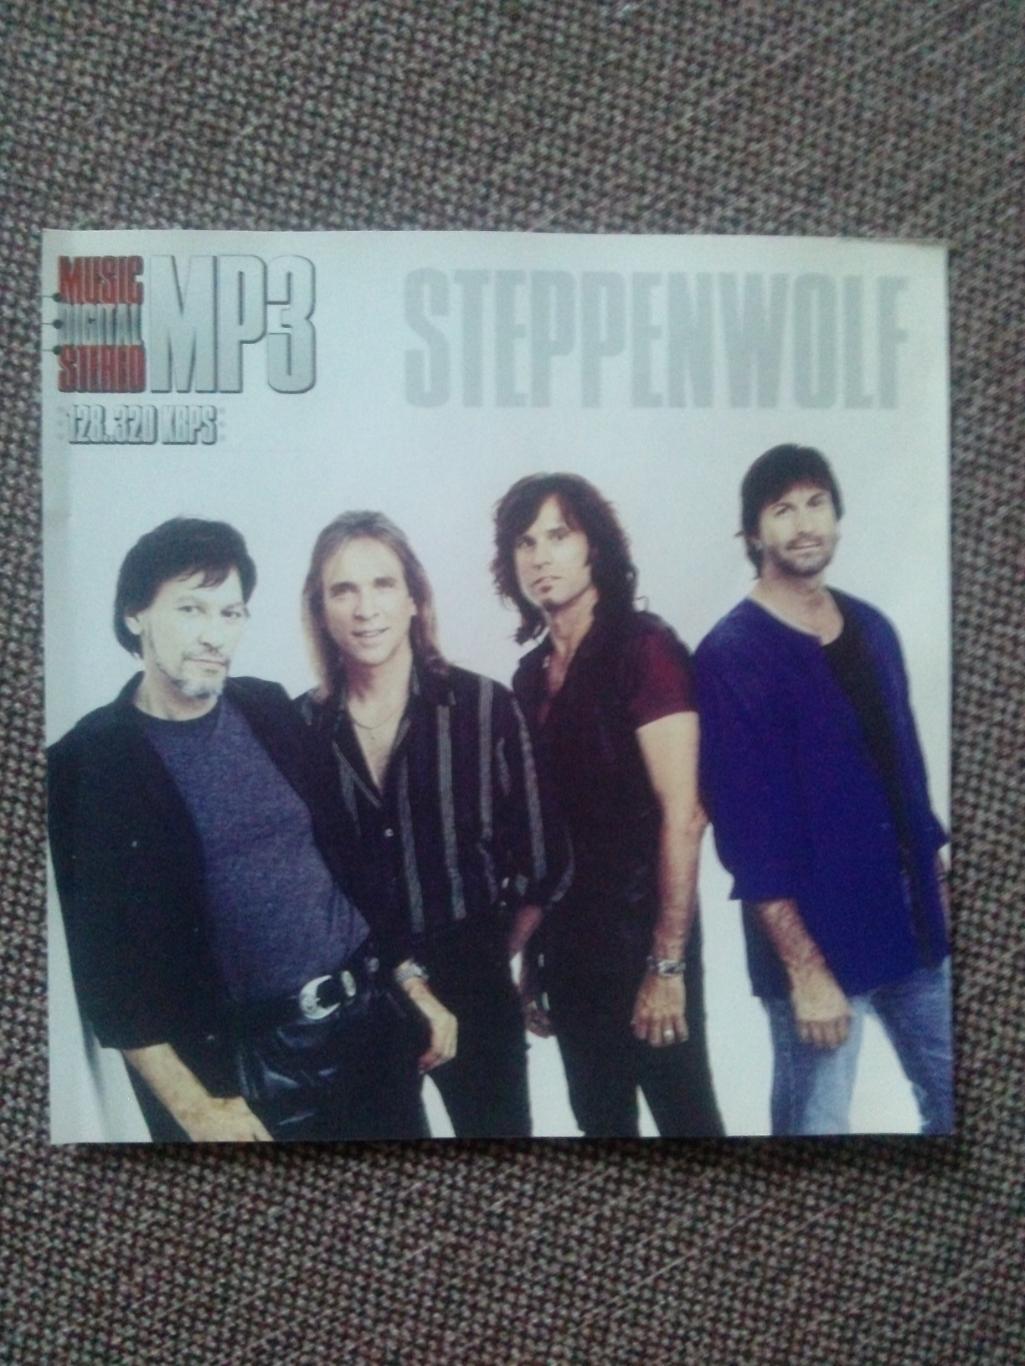 MP - 3 CD диск : группаSteppenwolf1968 - 1976 гг. Hard rock Рок музыка